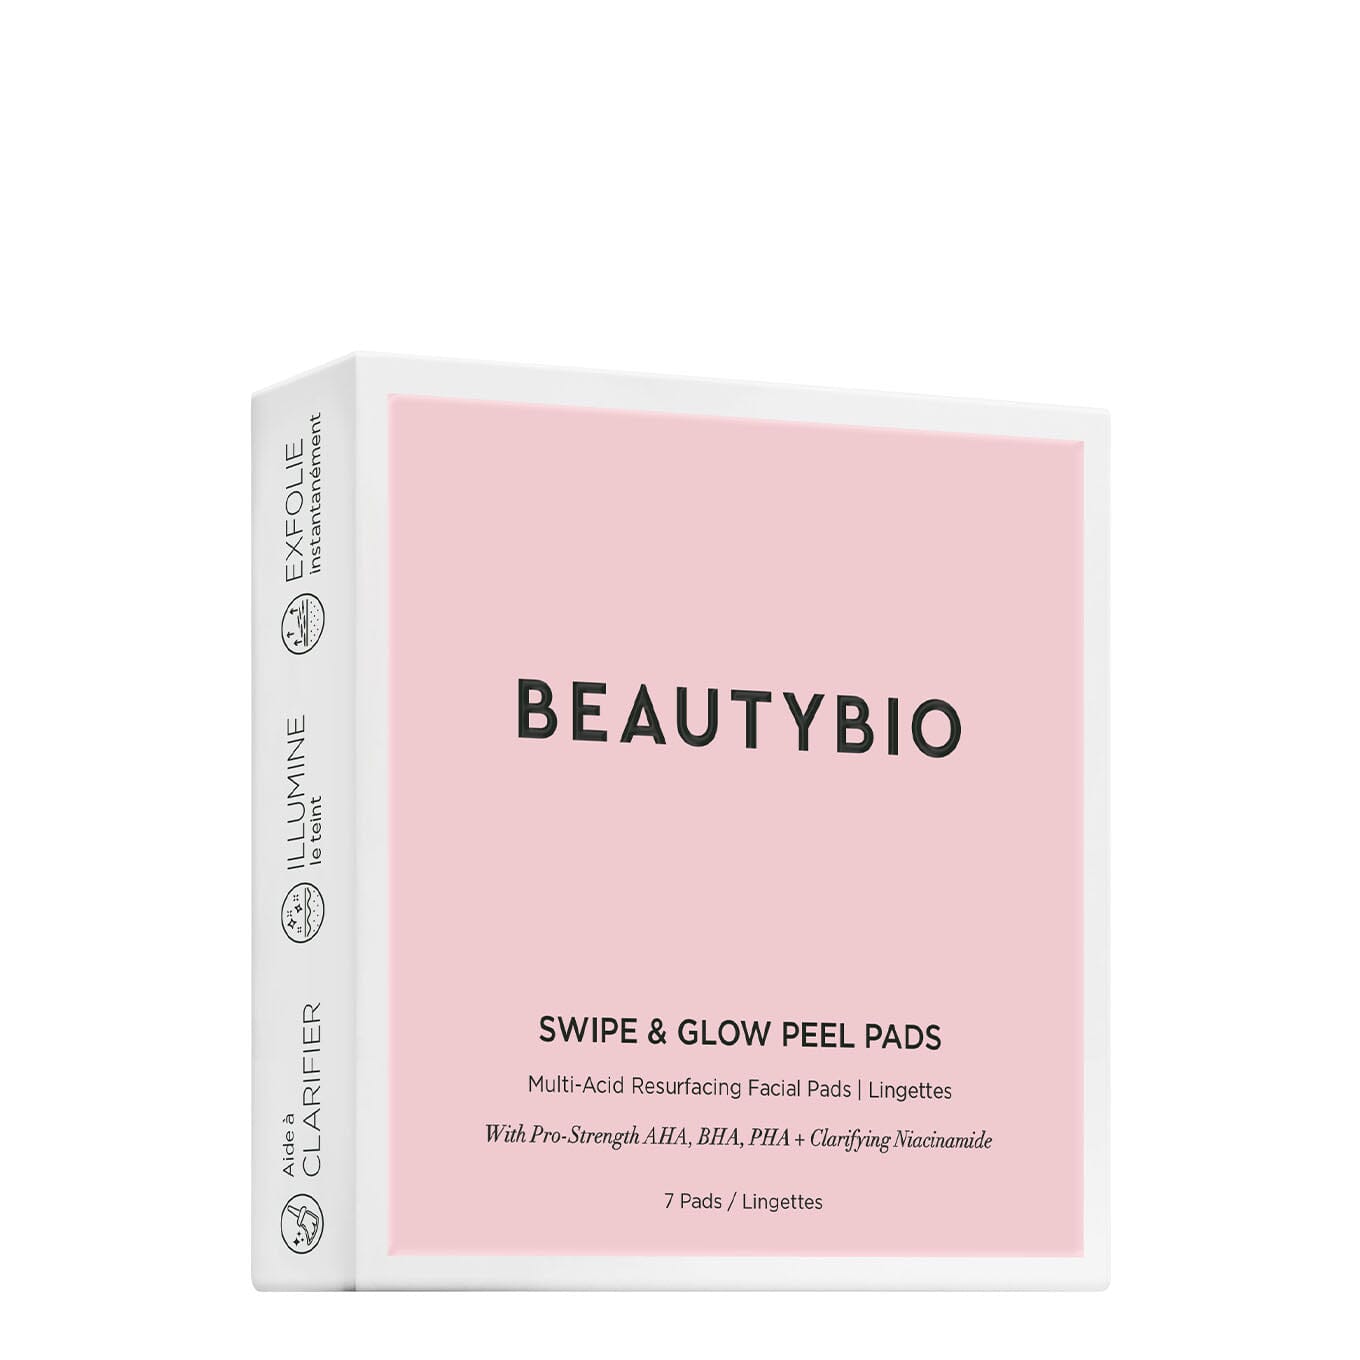 Swipe & Glow Peel Pads Skincare BeautyBio 7 Pack Singles 